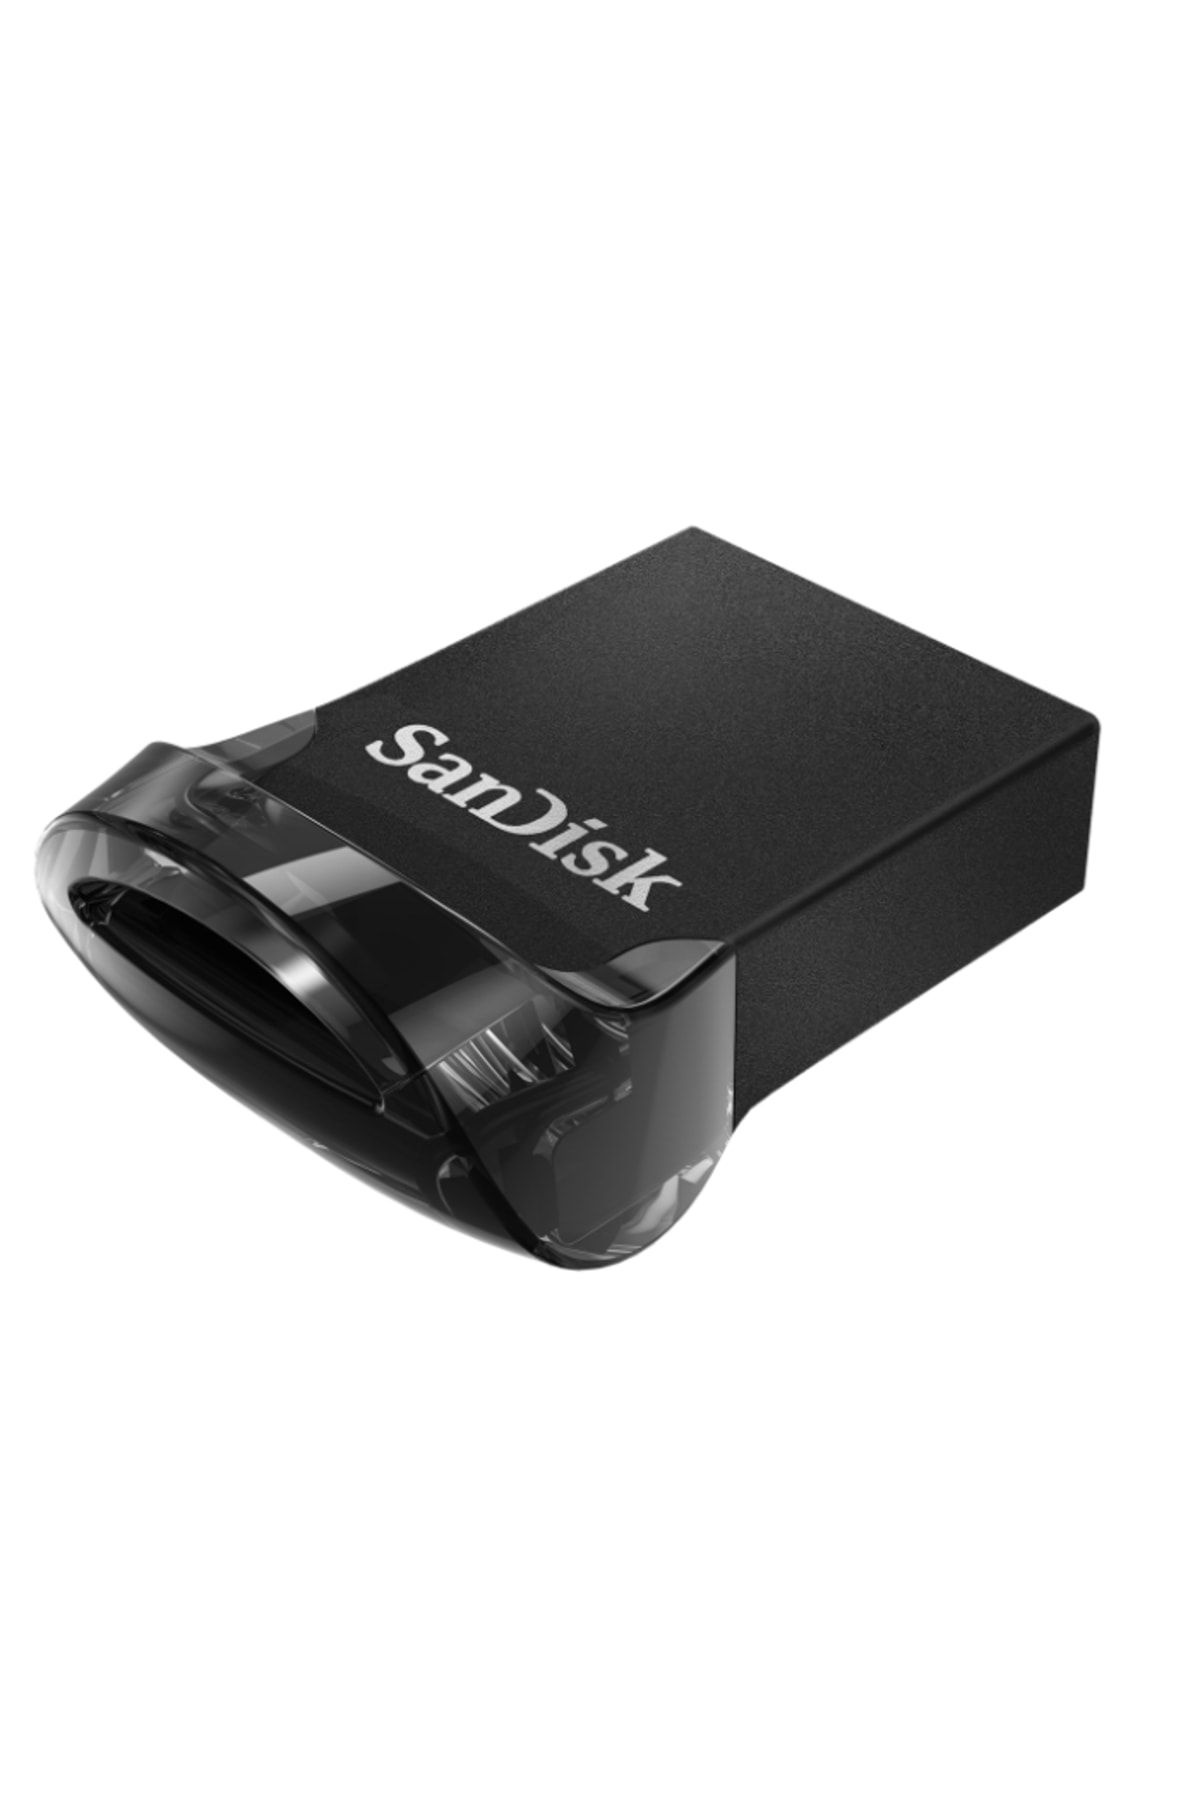 Sandisk Sdcz430-128g-g46 128gb Ultra Fit Usb 3.1 130mb-s Mini Siyah Flash Bellek